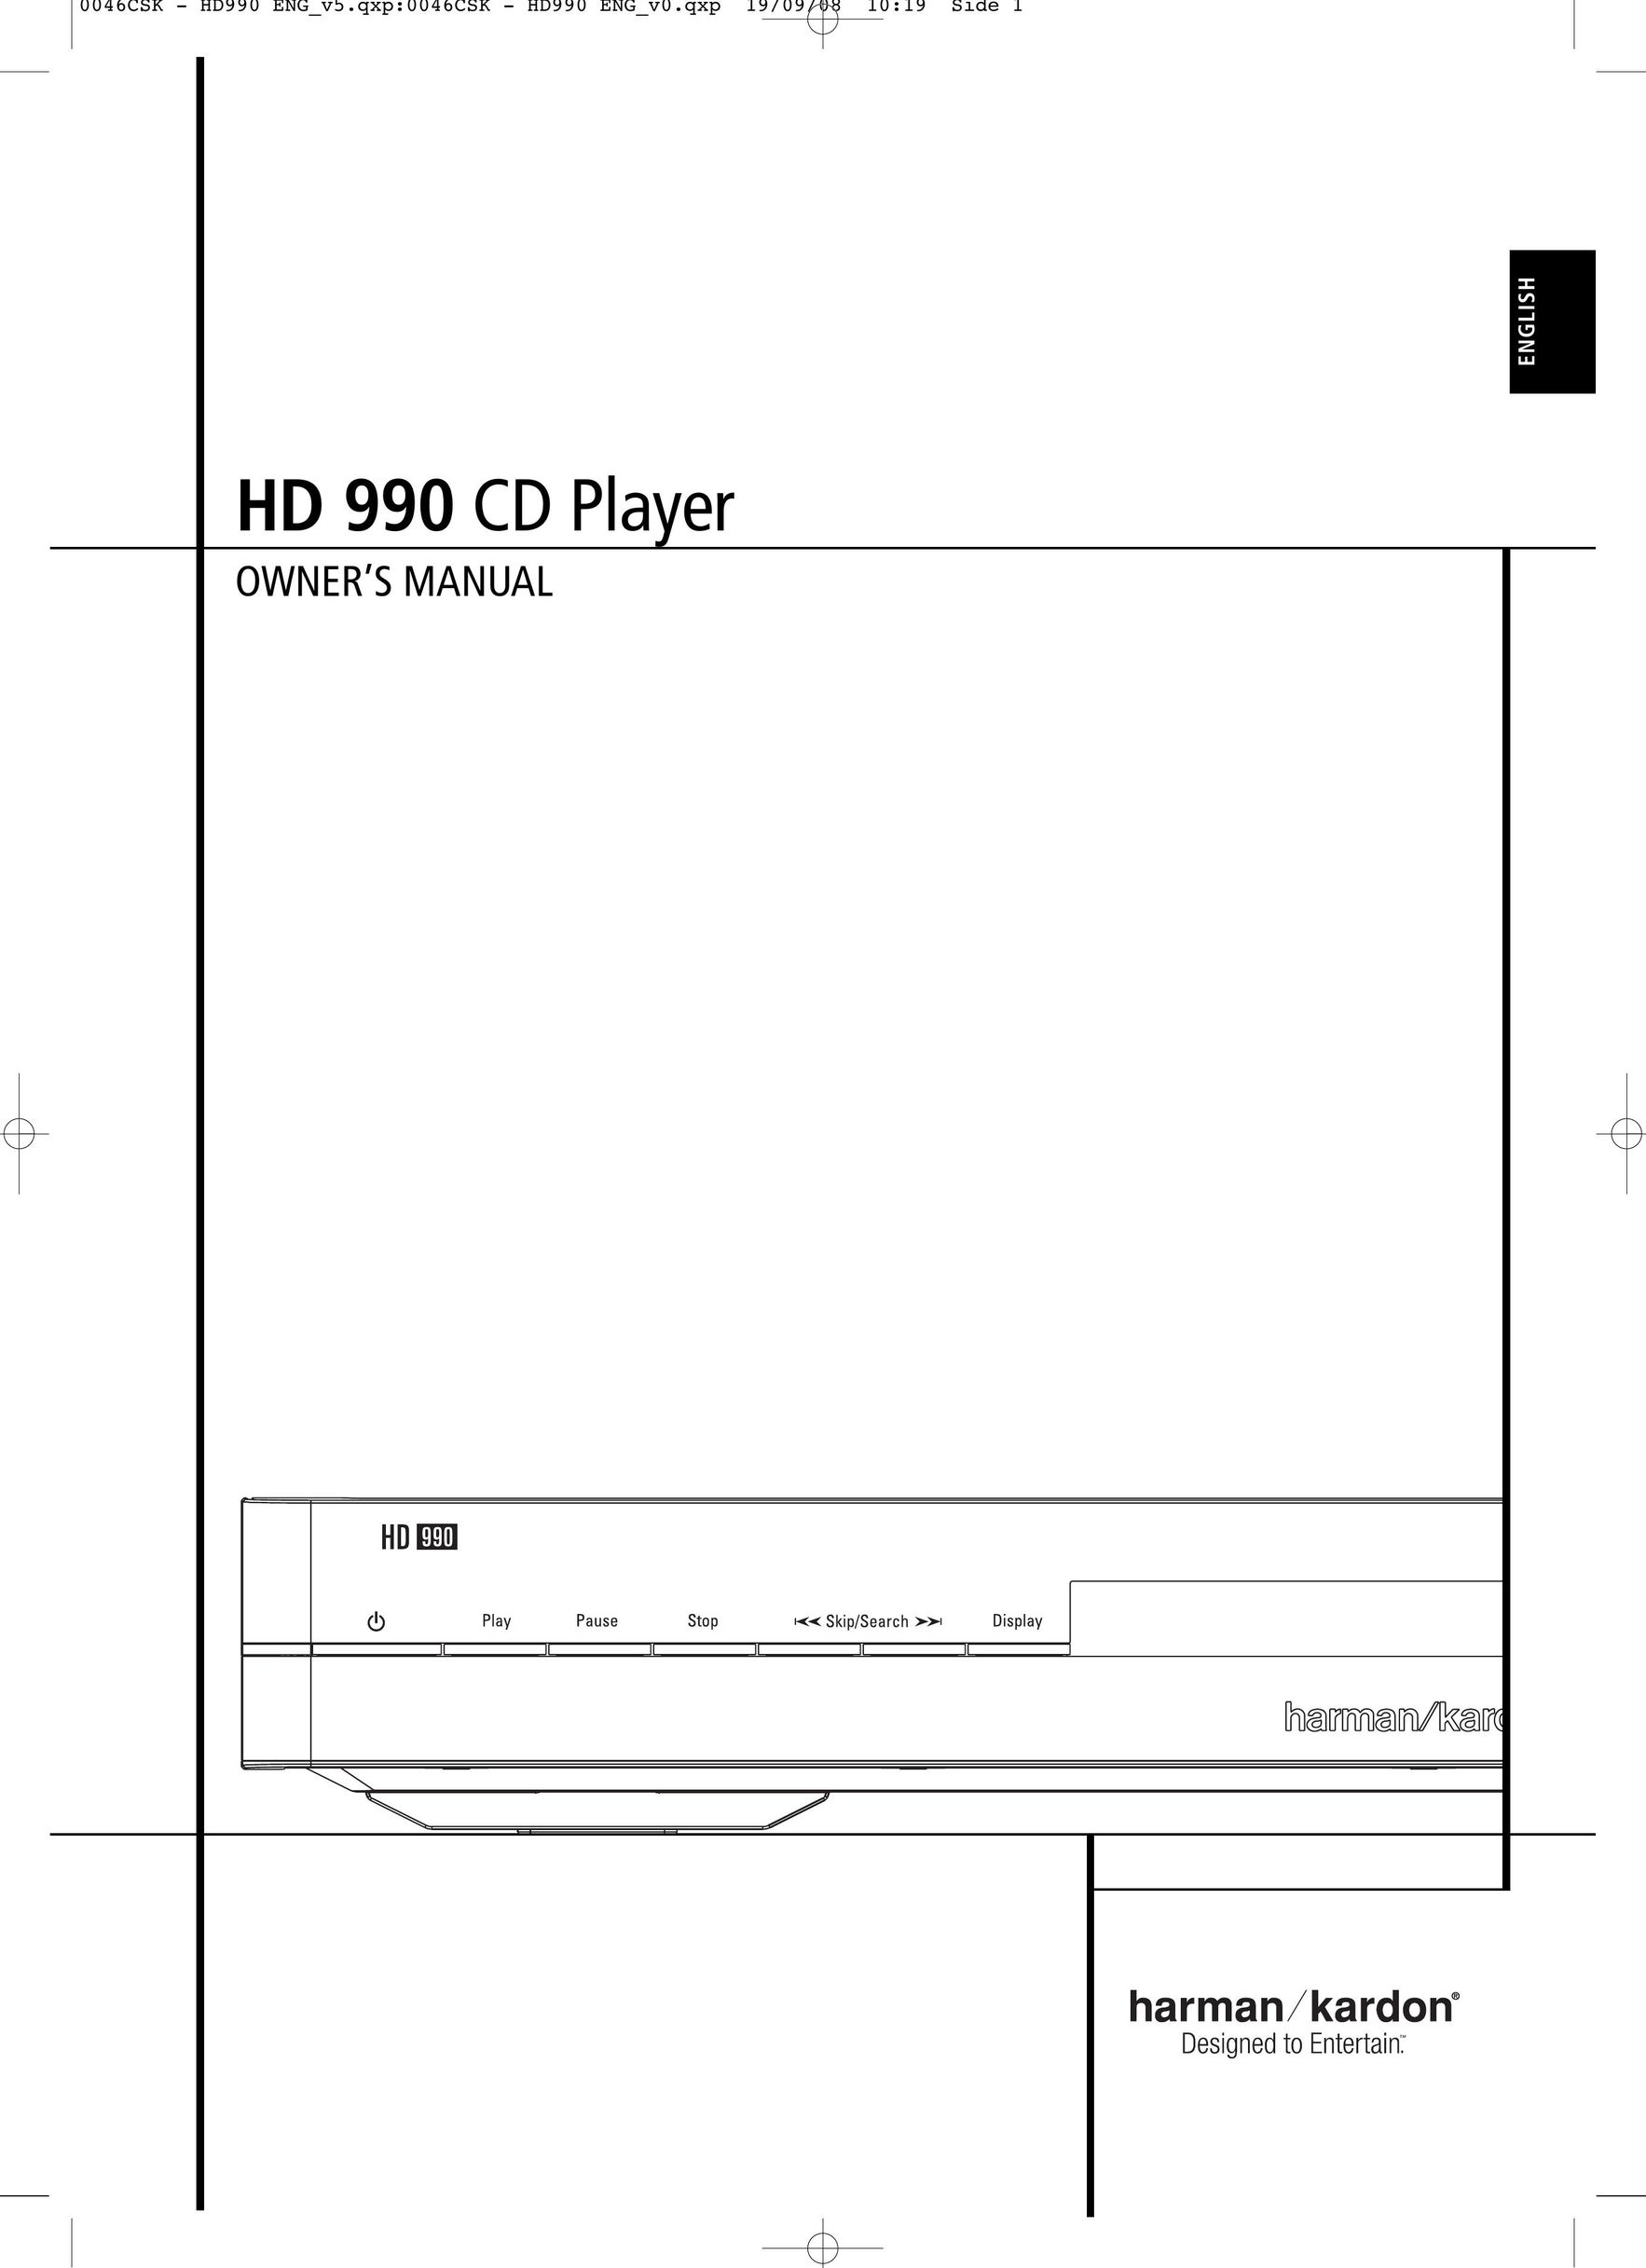 Harman-Kardon HD 990 CD Player User Manual (Page 1)